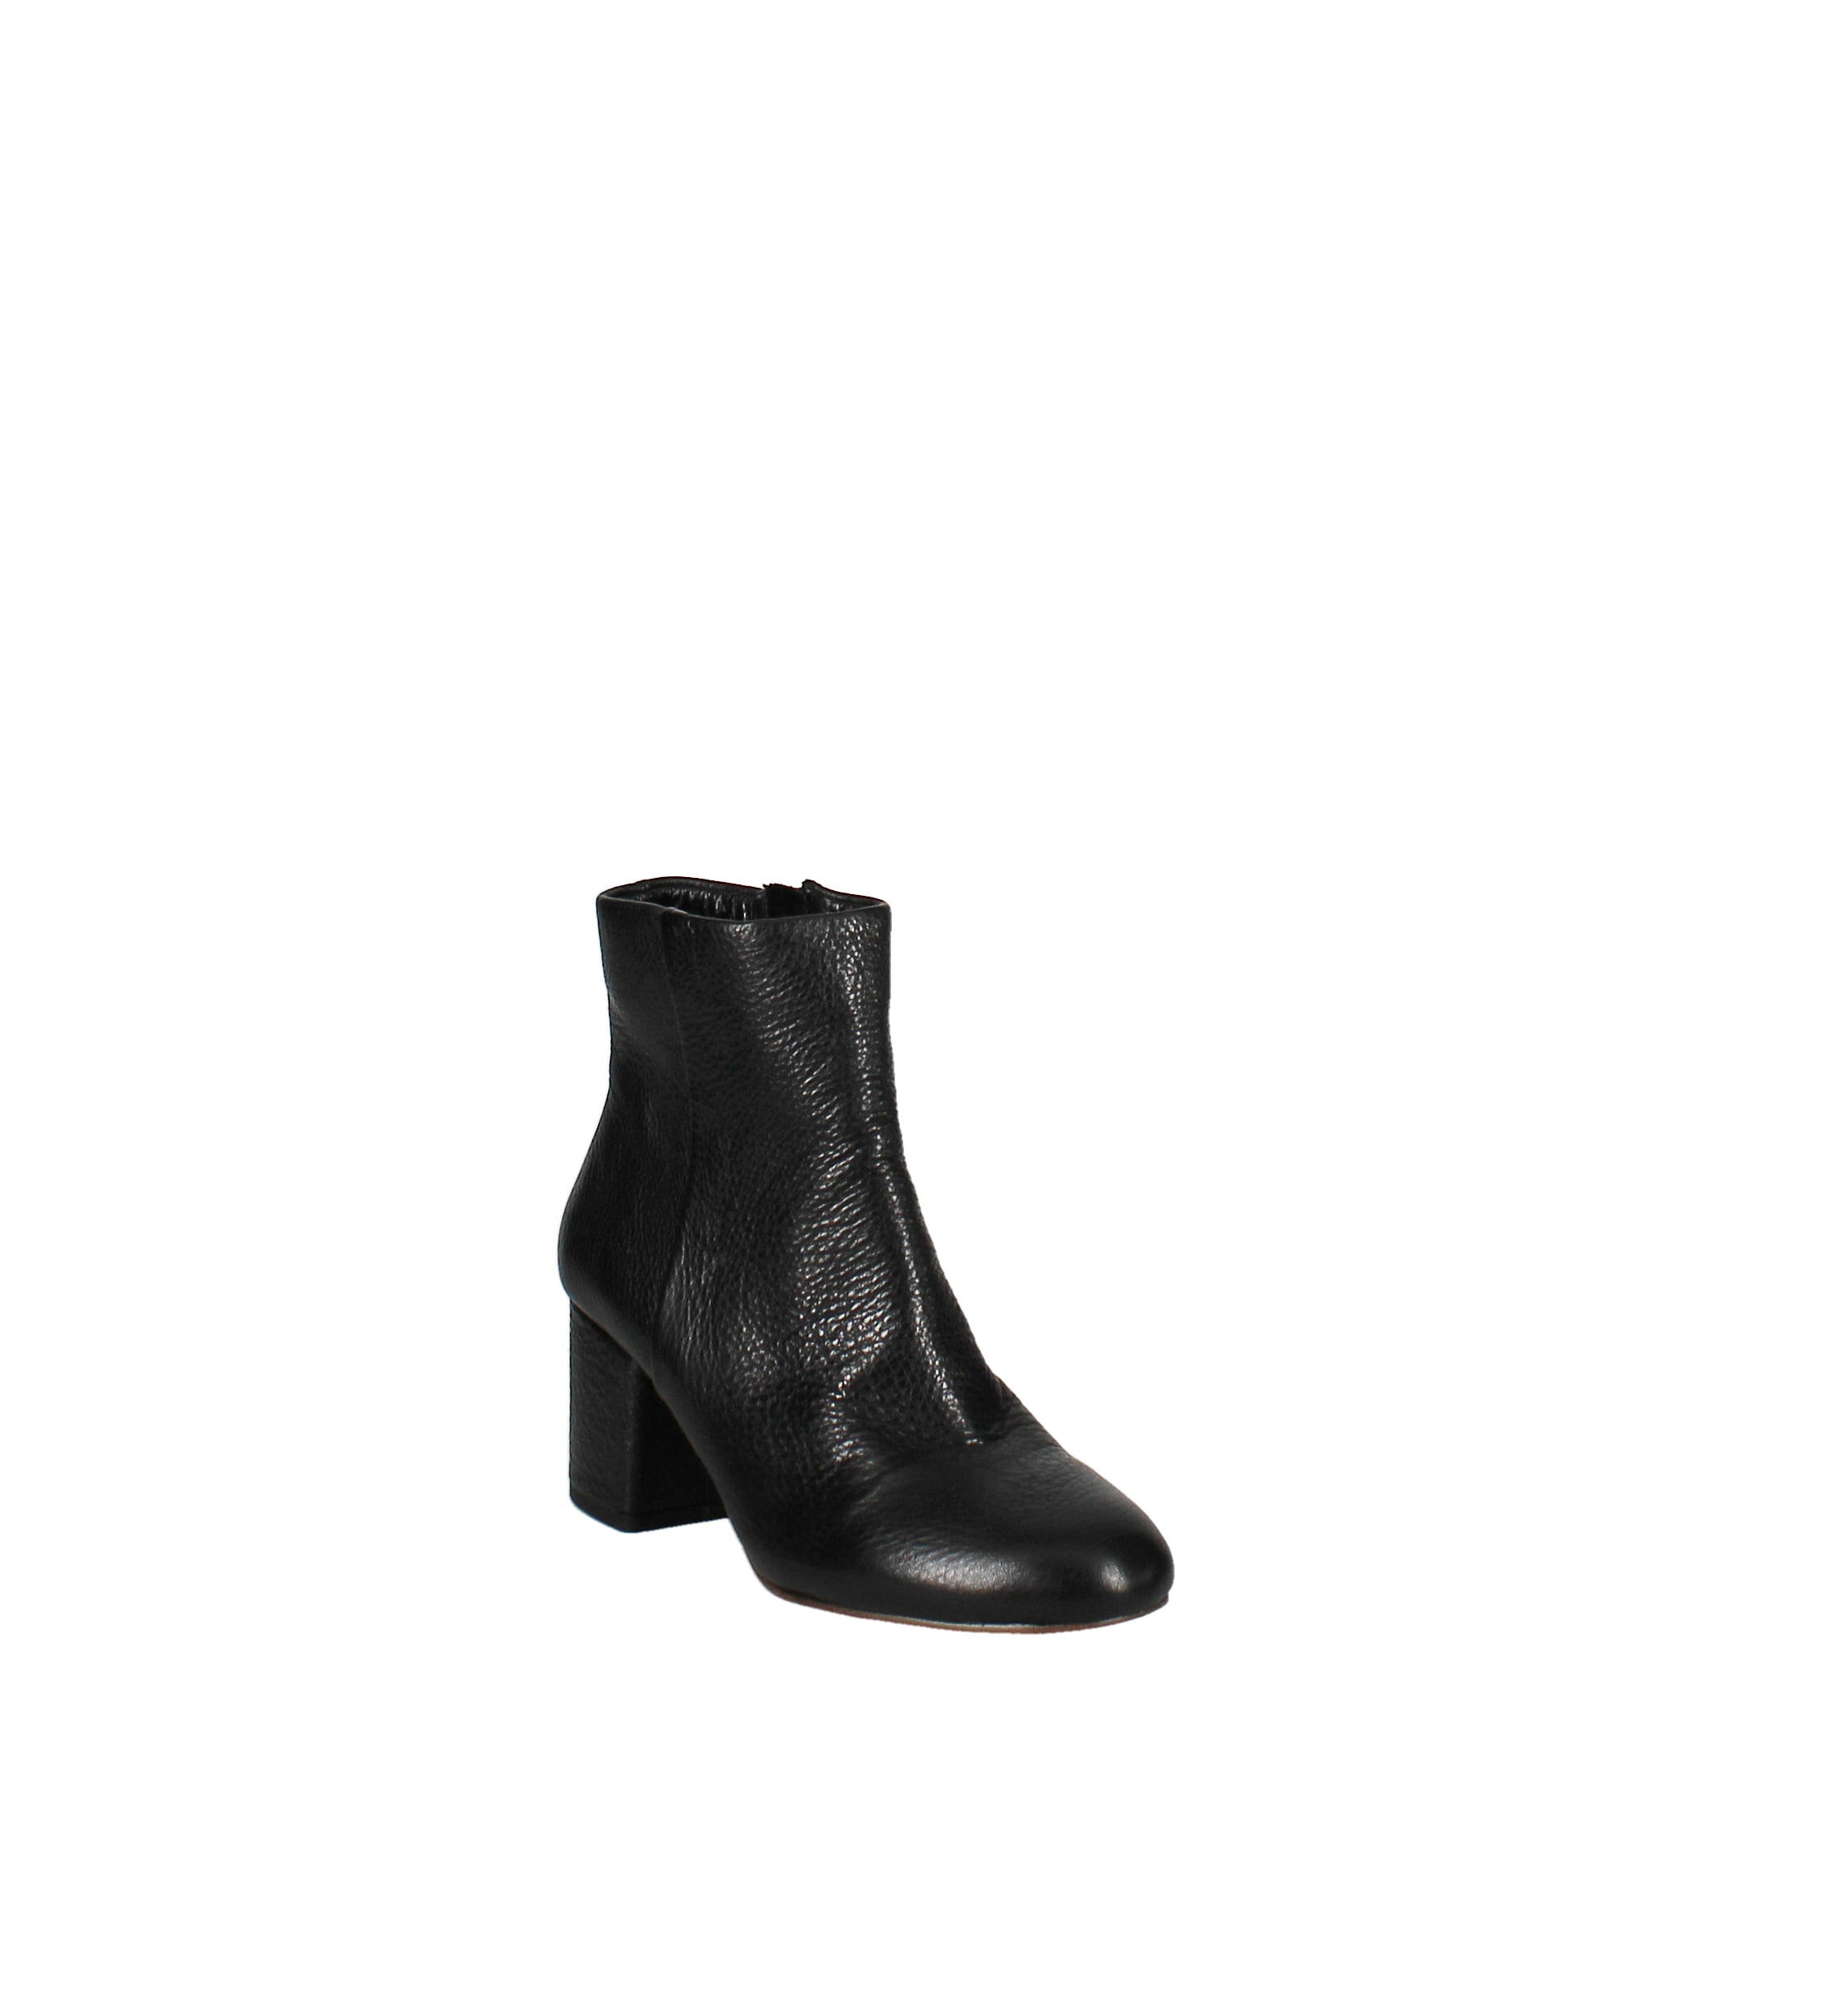 Sam Edelman Womens Kadison Leather Ankle Boots Multi 6.5 Medium (B,M) -  Walmart.com